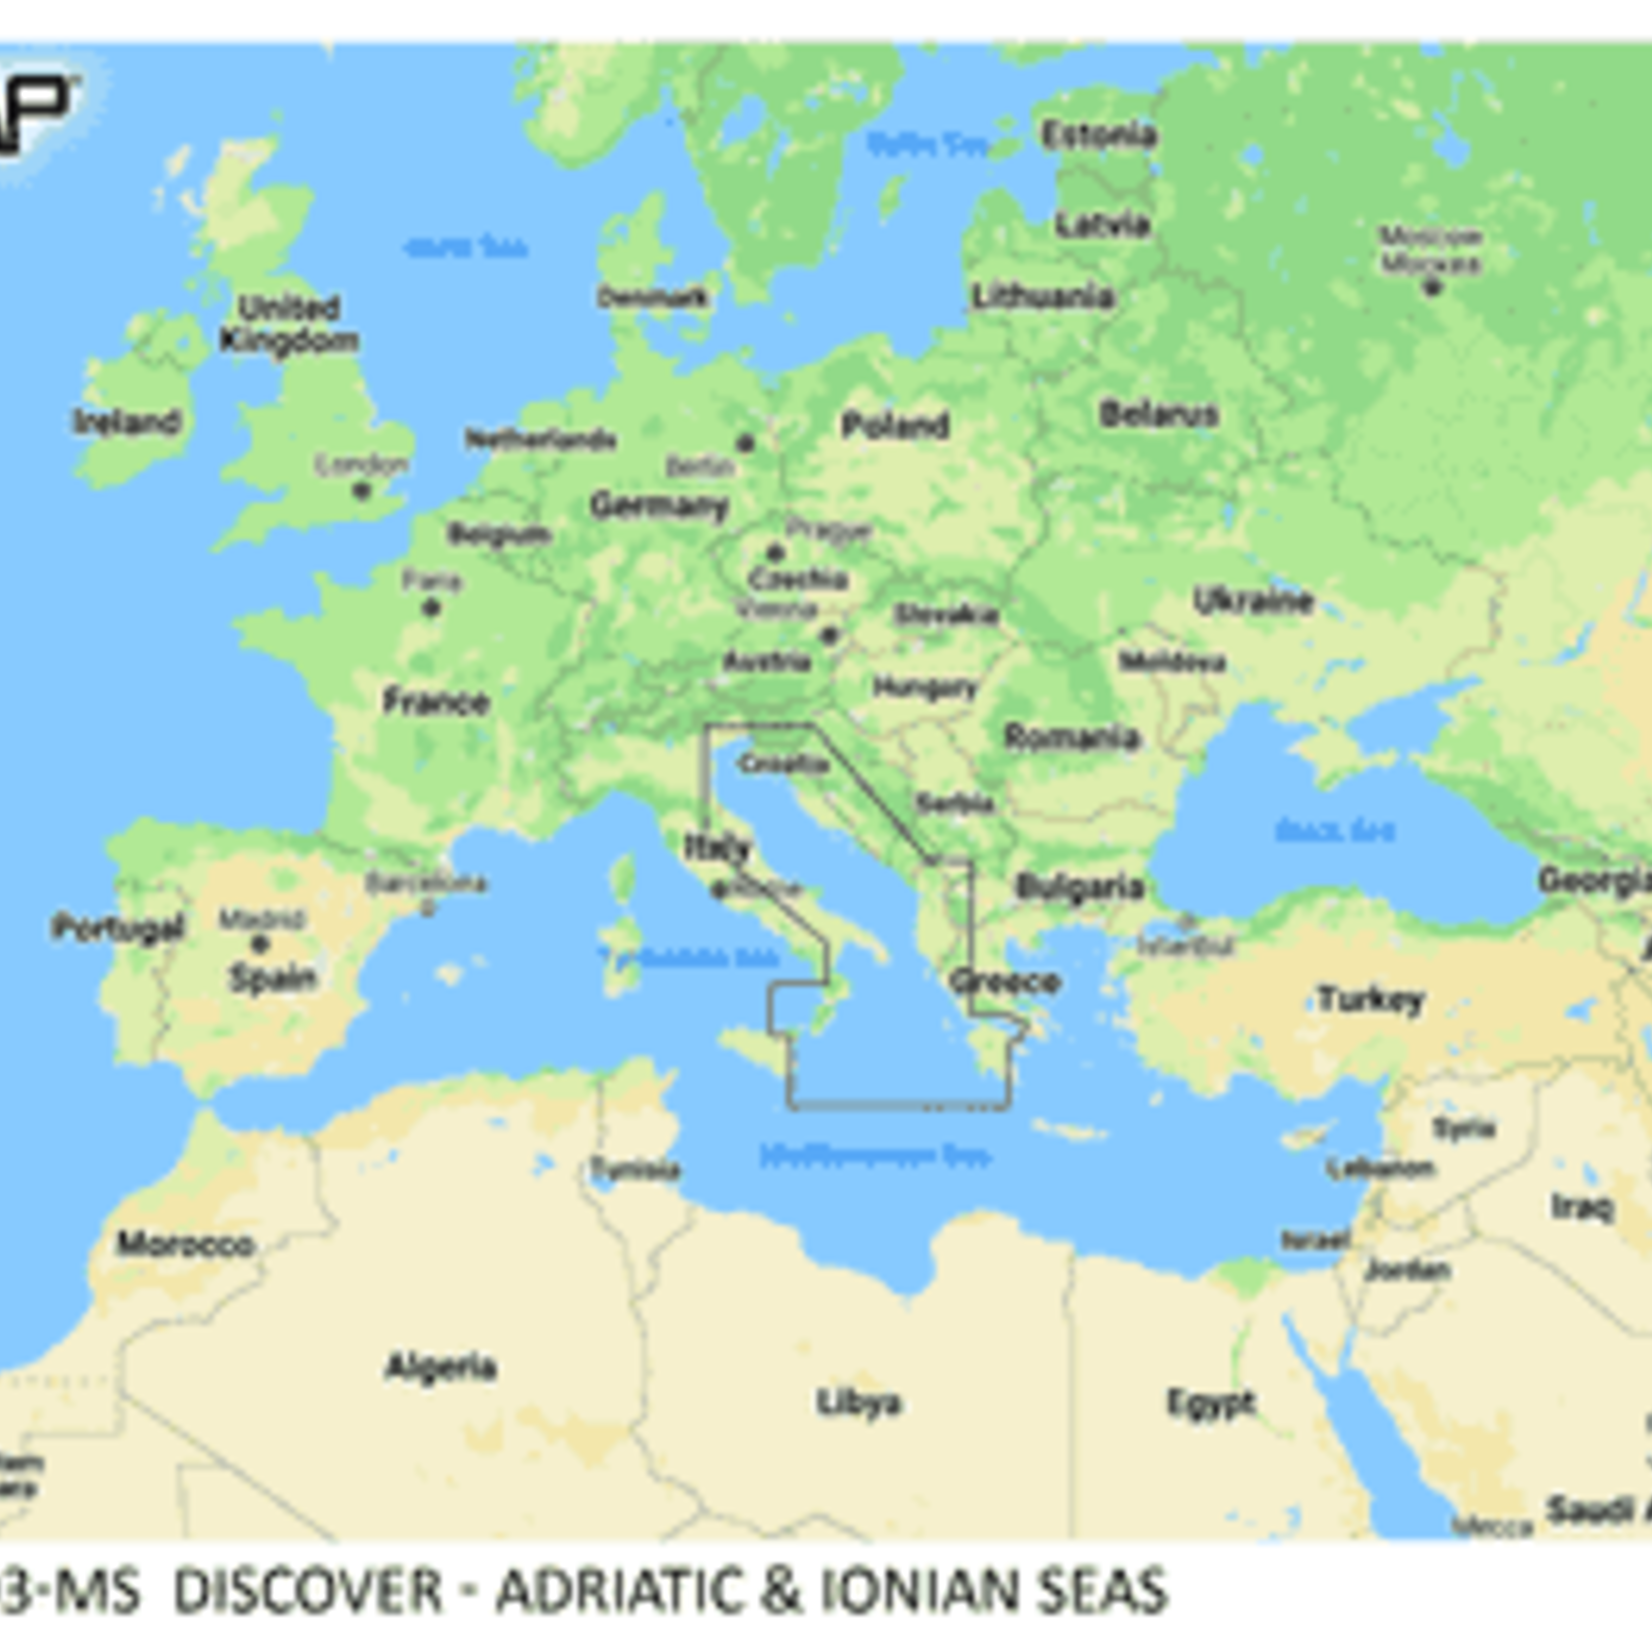 C-MAP DISCOVER - Adriatic & Ionian Seas